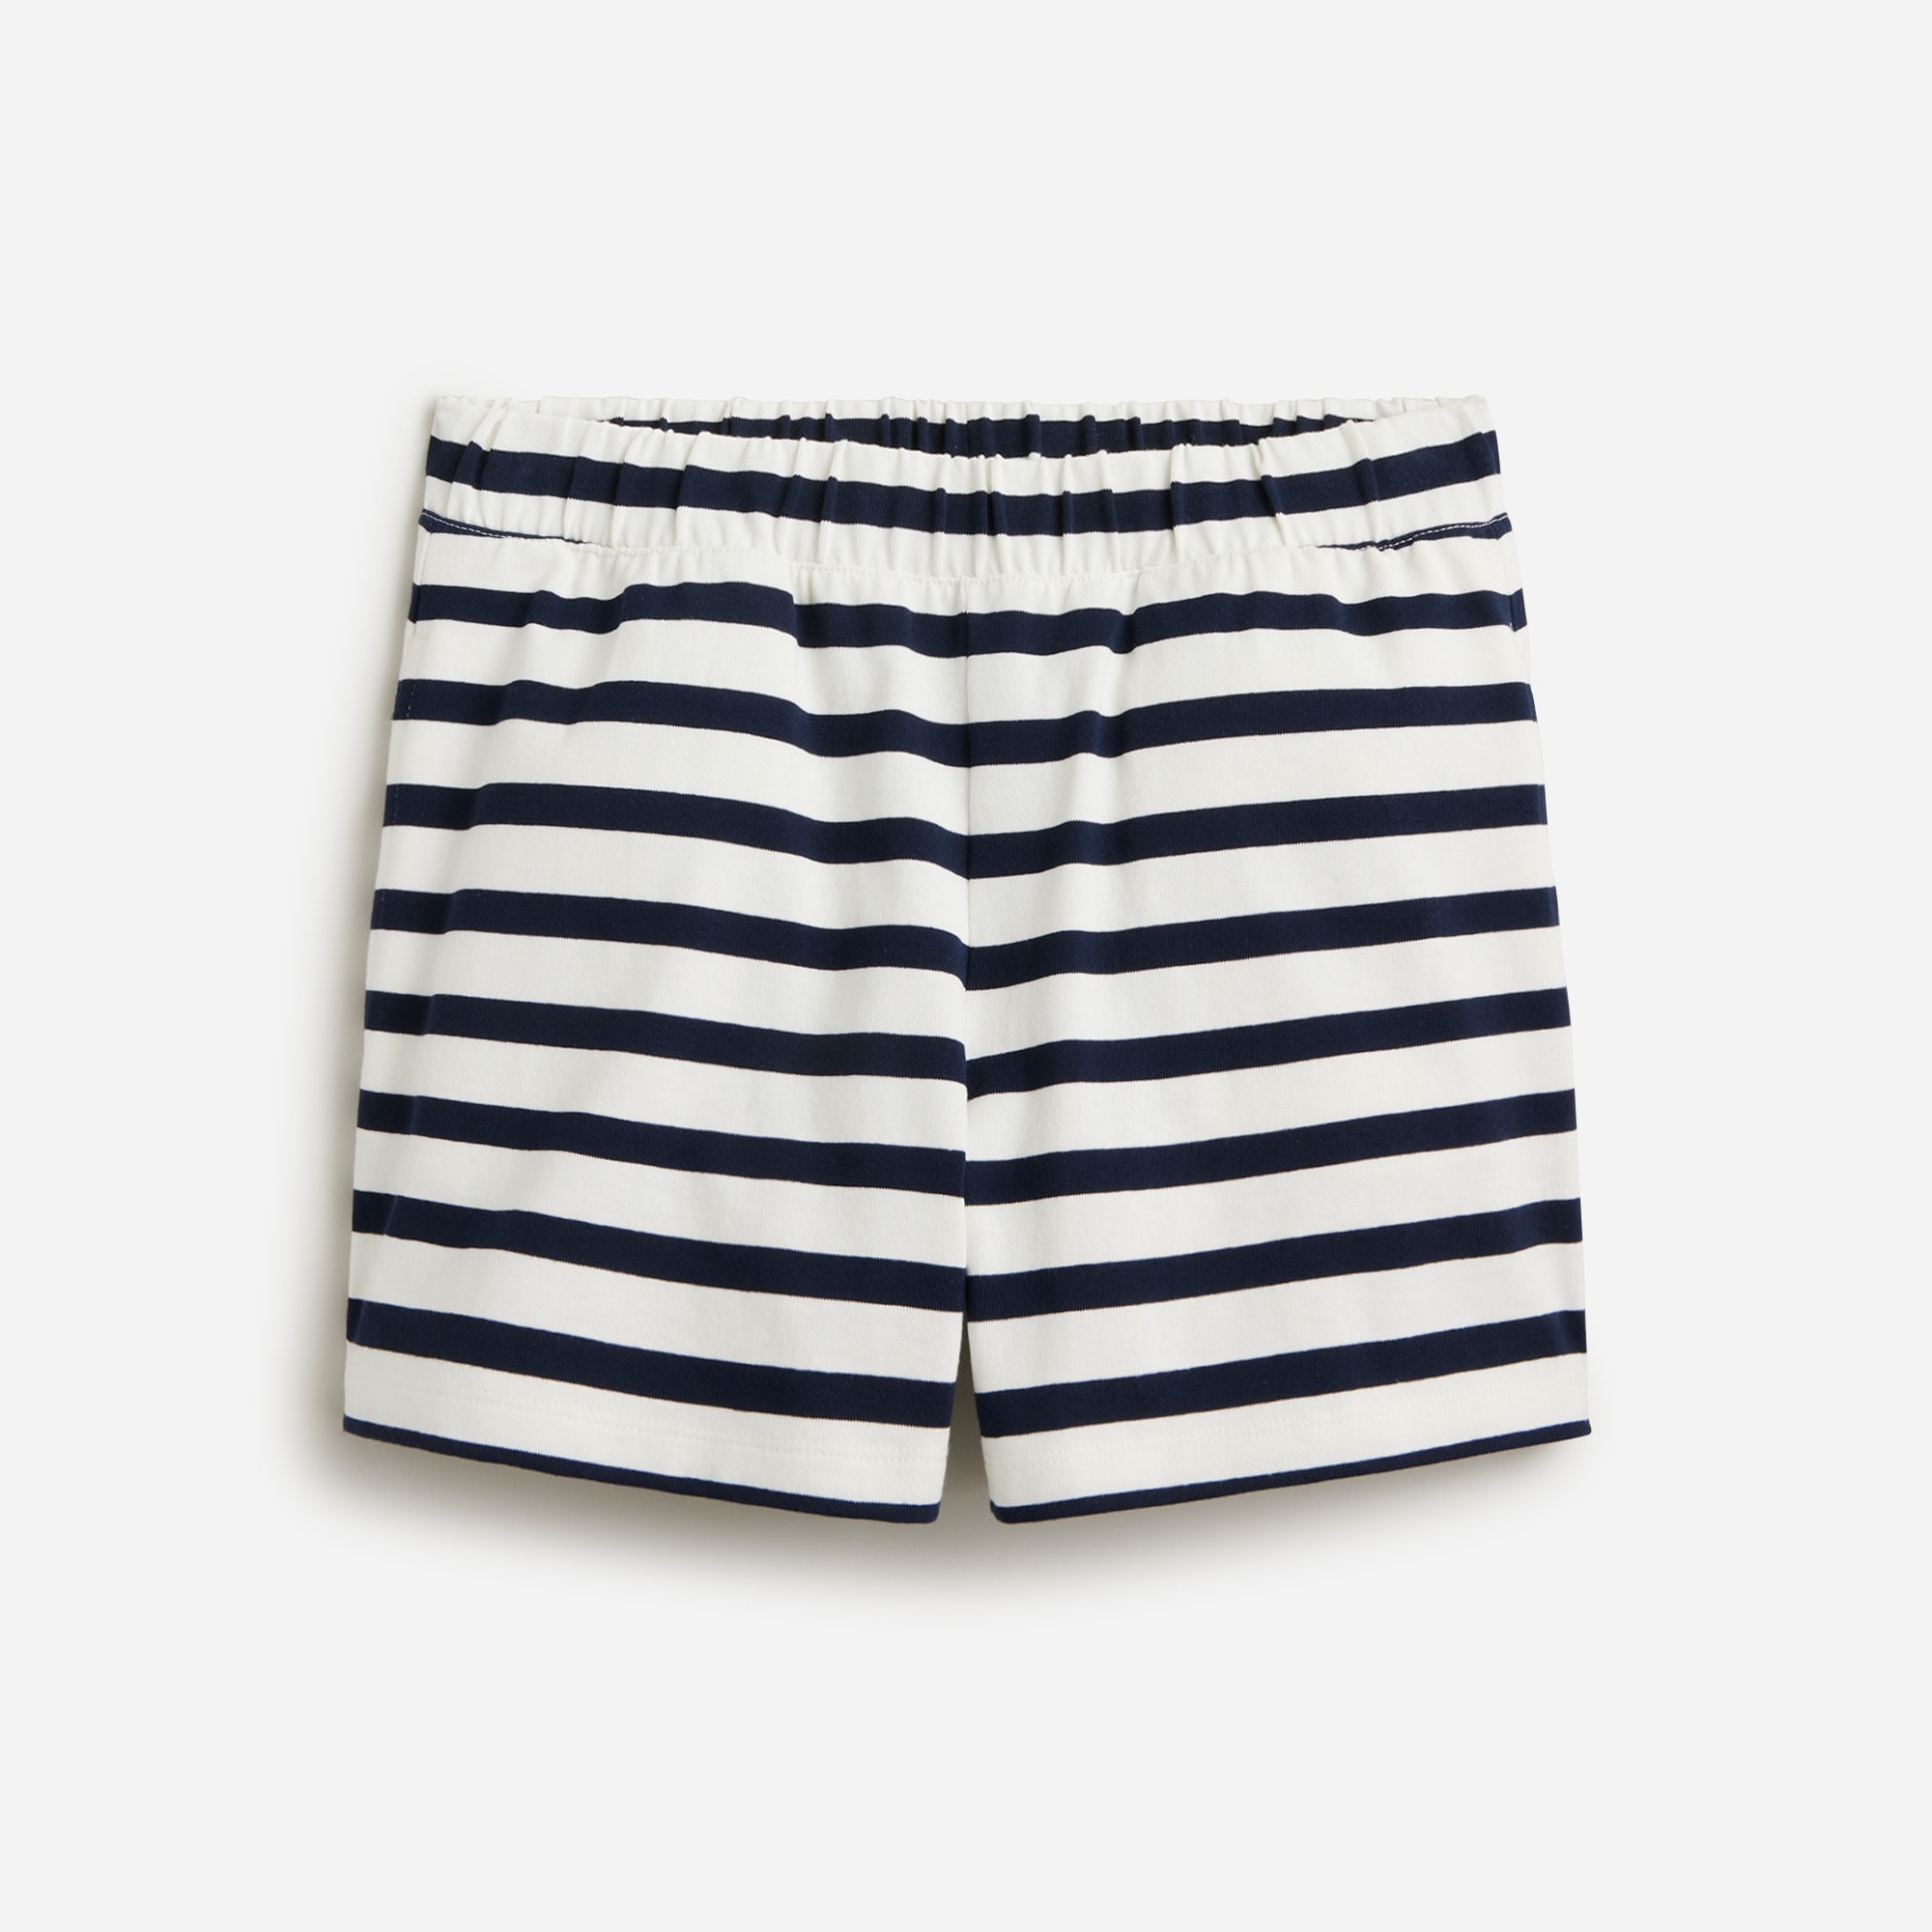  Pull-on short in stripe mariner cotton